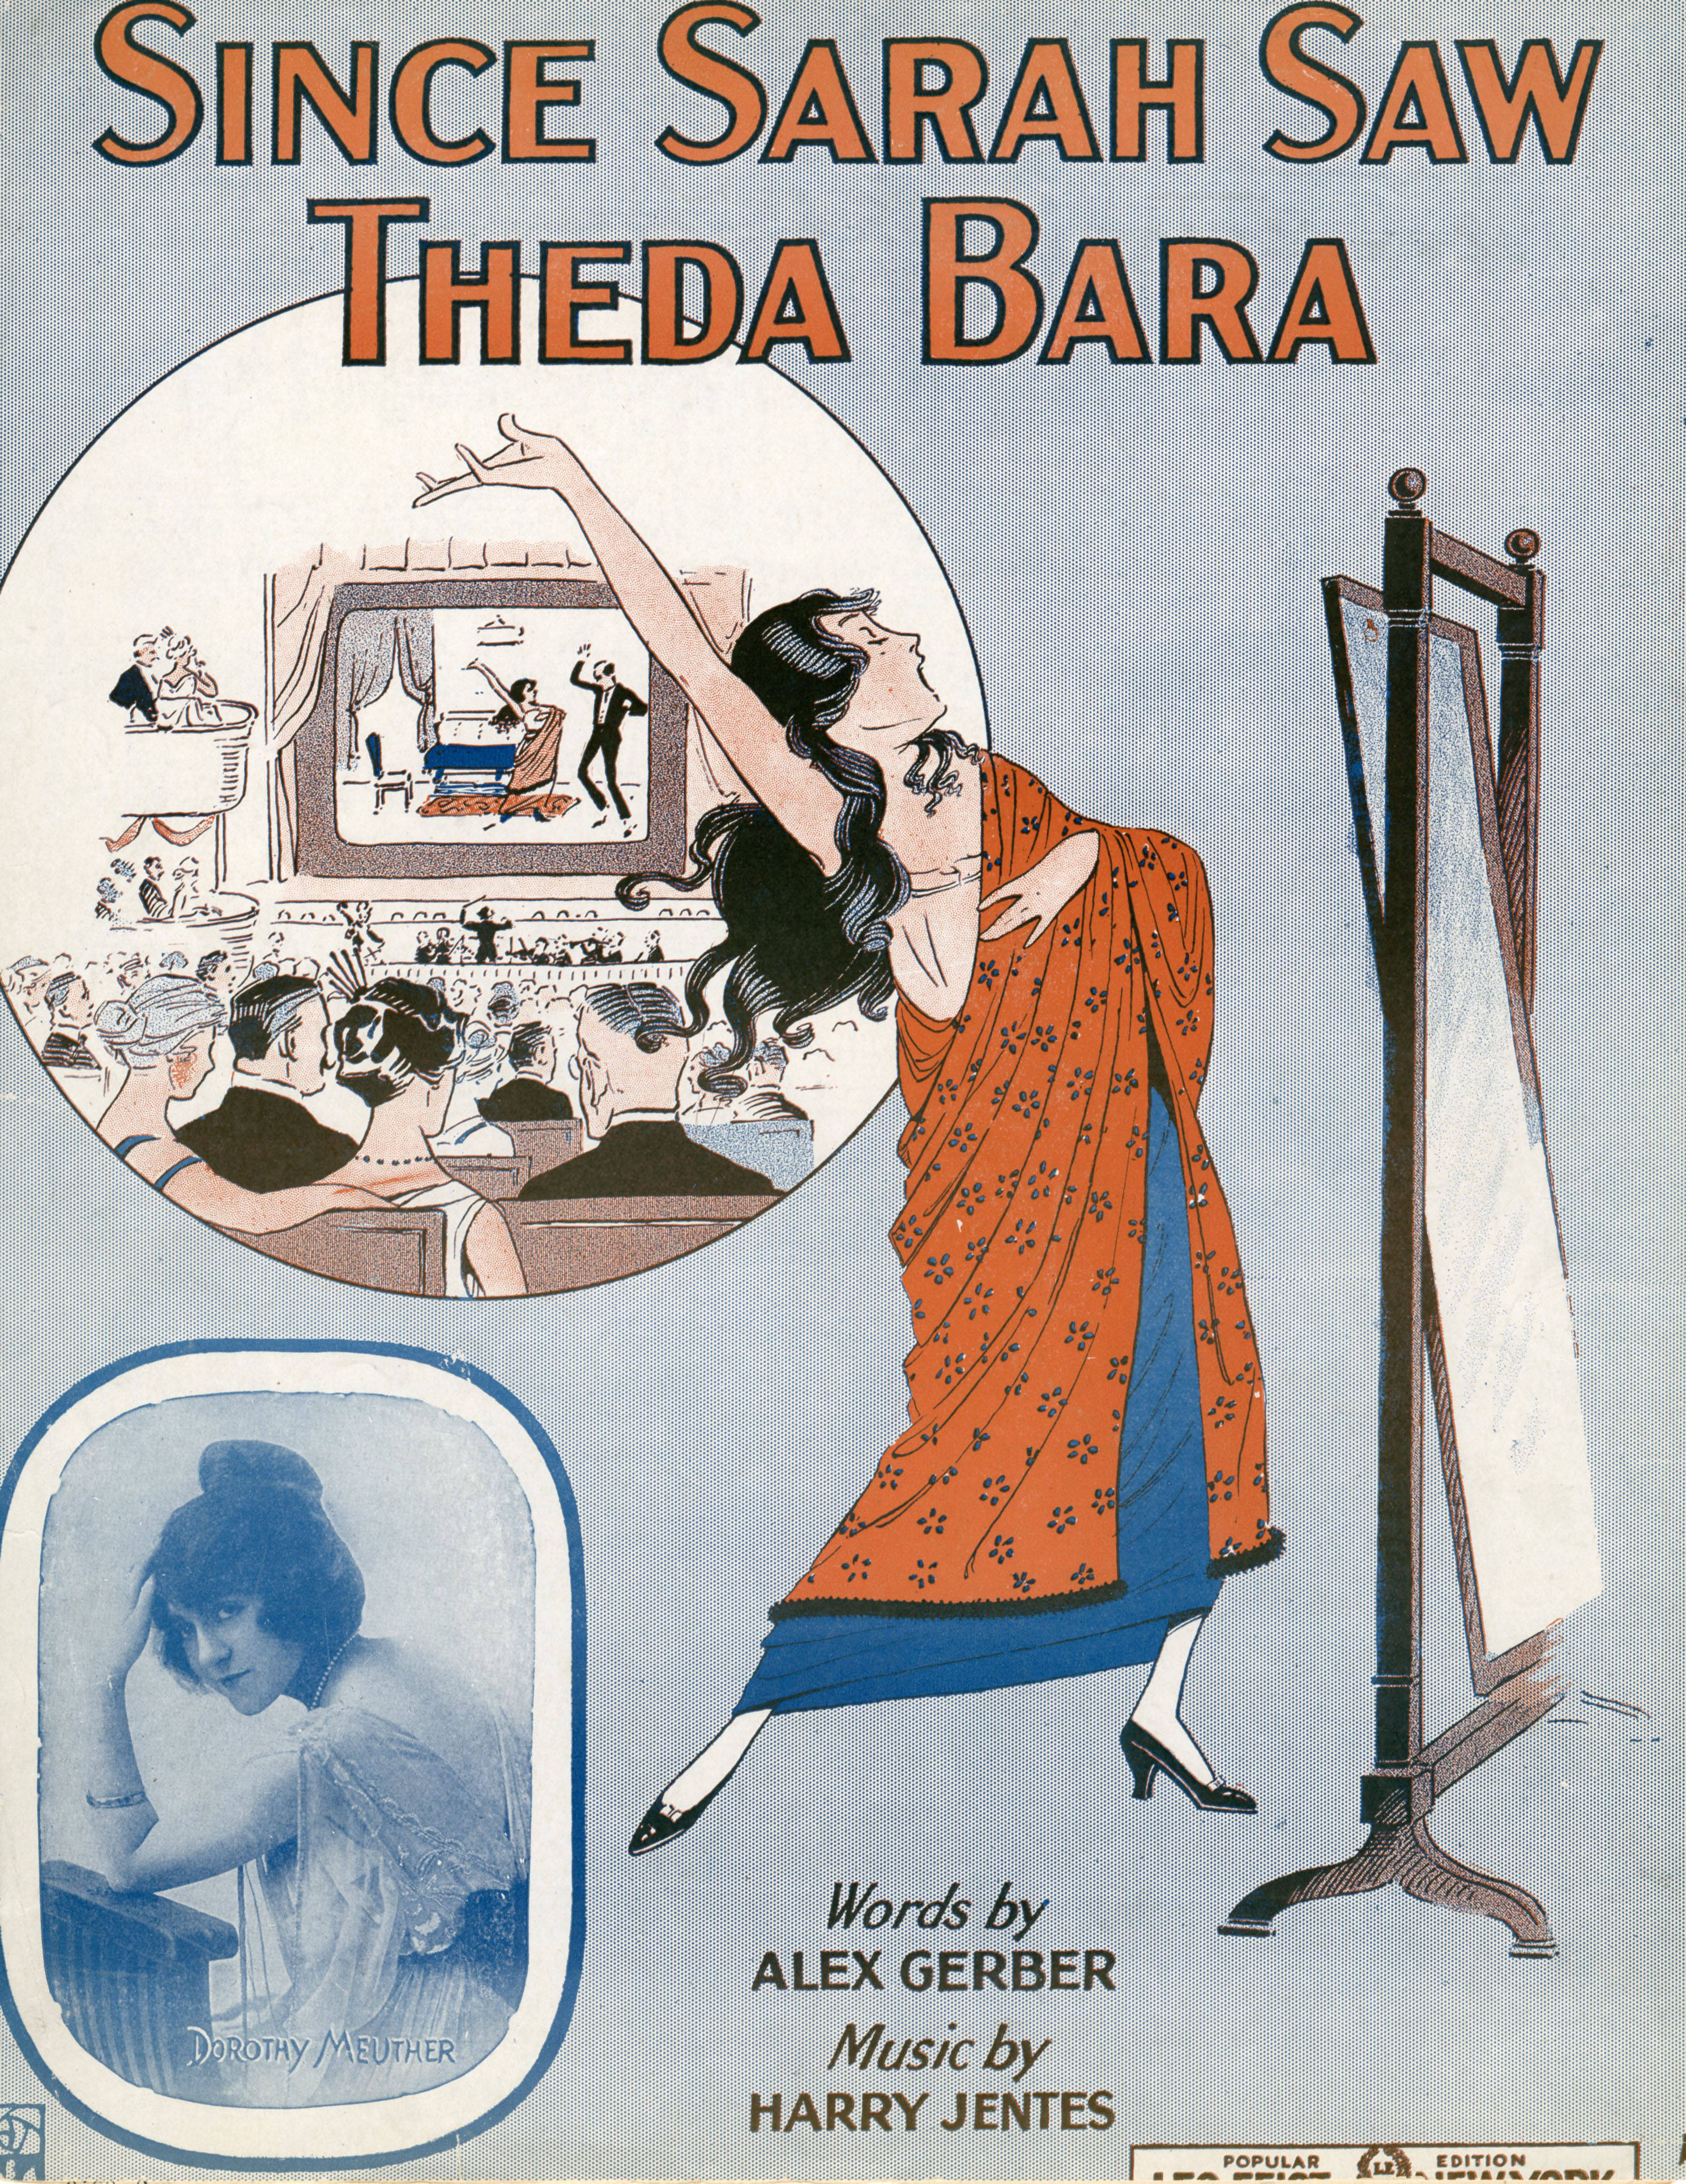 Sheet music cover - SINCE SARAH SAW THEDA BARA (1916)